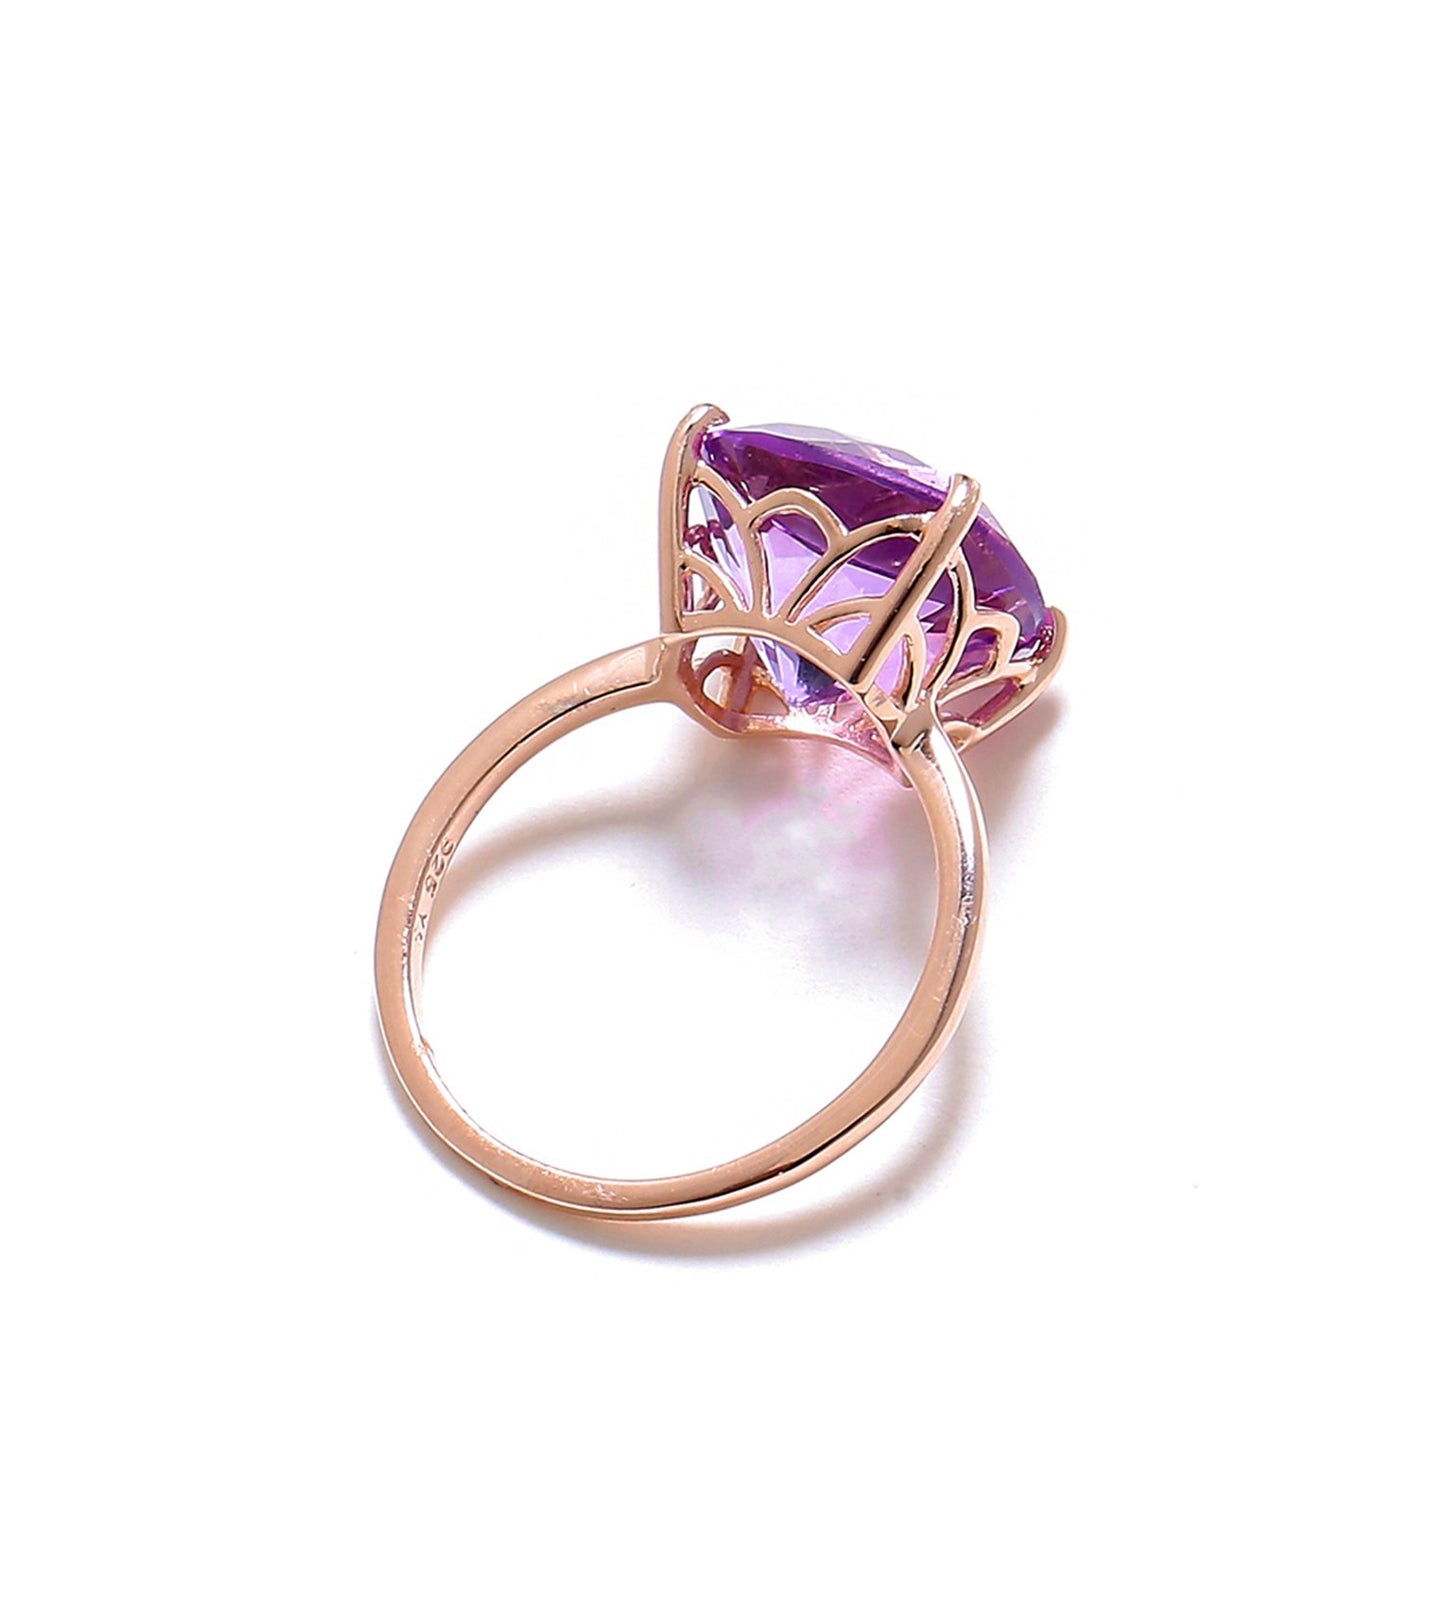 Tiramisu 5.85 Ct Amethyst Solid 10k Rose Gold Ring Jewelry